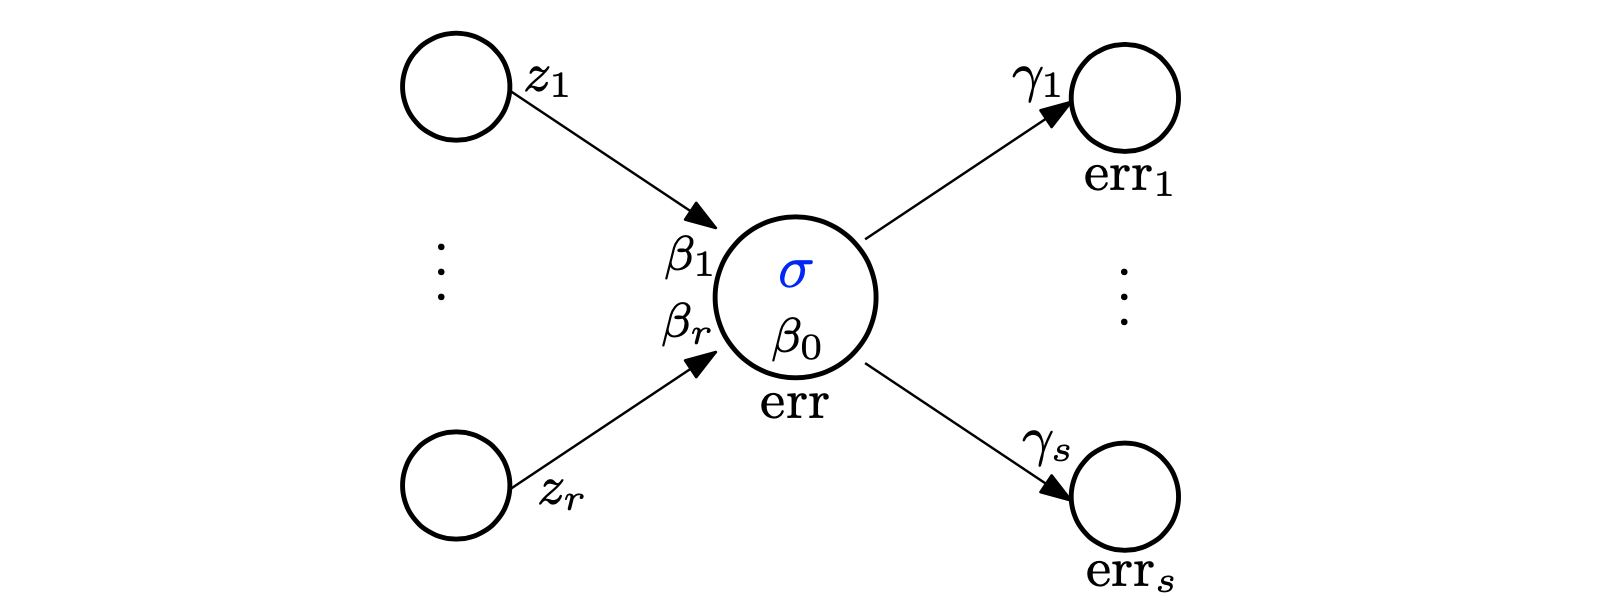 Figure 3. Illustration for the backward propagation phase